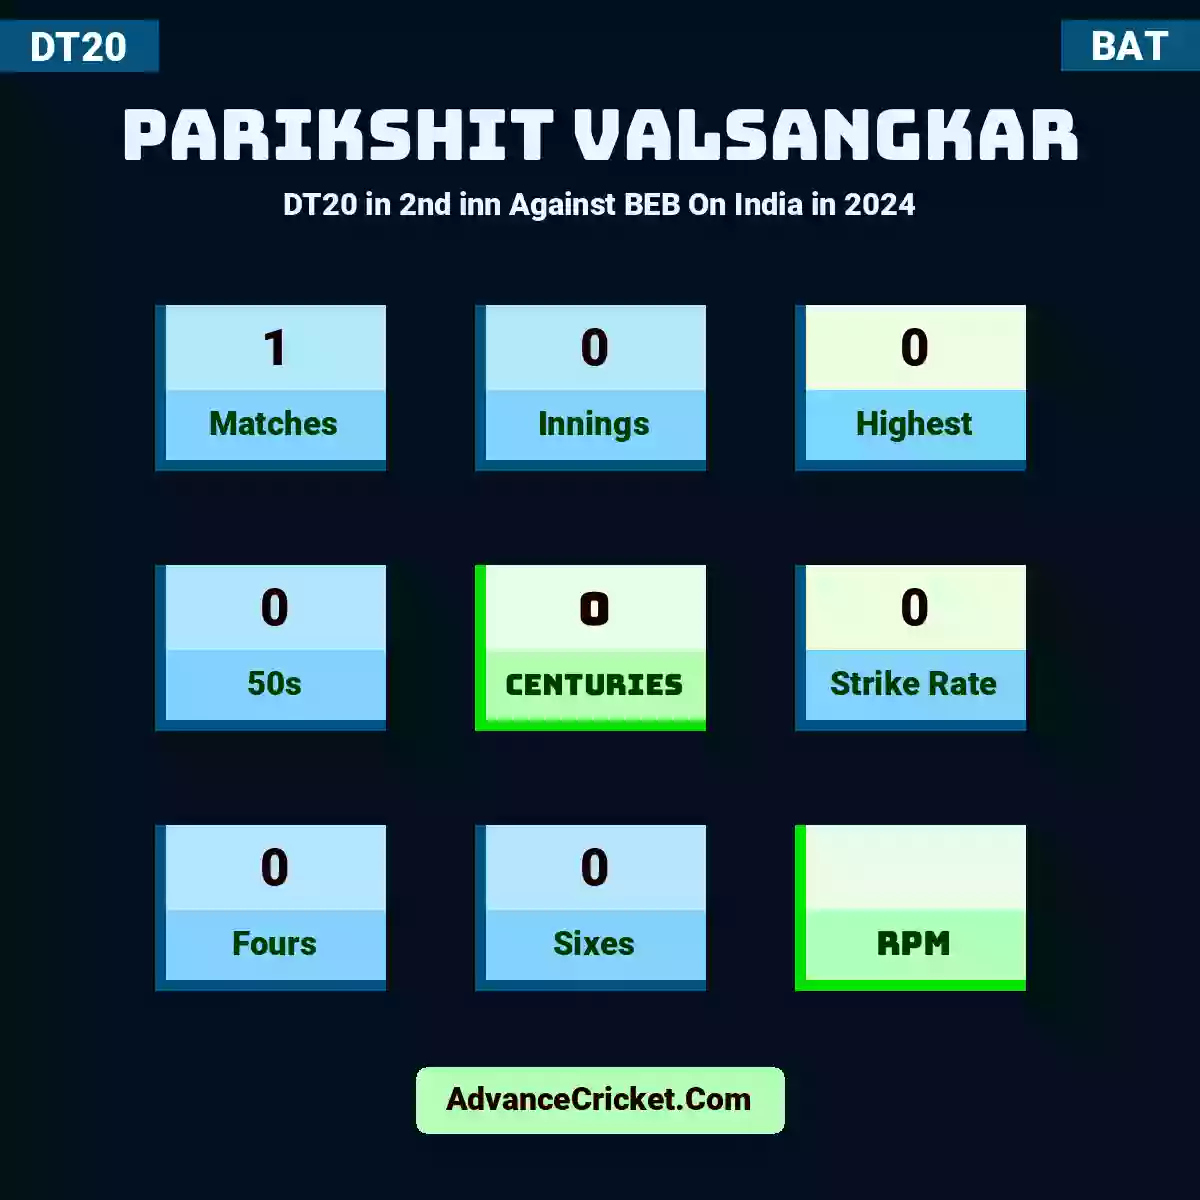 Parikshit Valsangkar DT20  in 2nd inn Against BEB On India in 2024, Parikshit Valsangkar played 1 matches, scored 0 runs as highest, 0 half-centuries, and 0 centuries, with a strike rate of 0. P.Valsangkar hit 0 fours and 0 sixes.